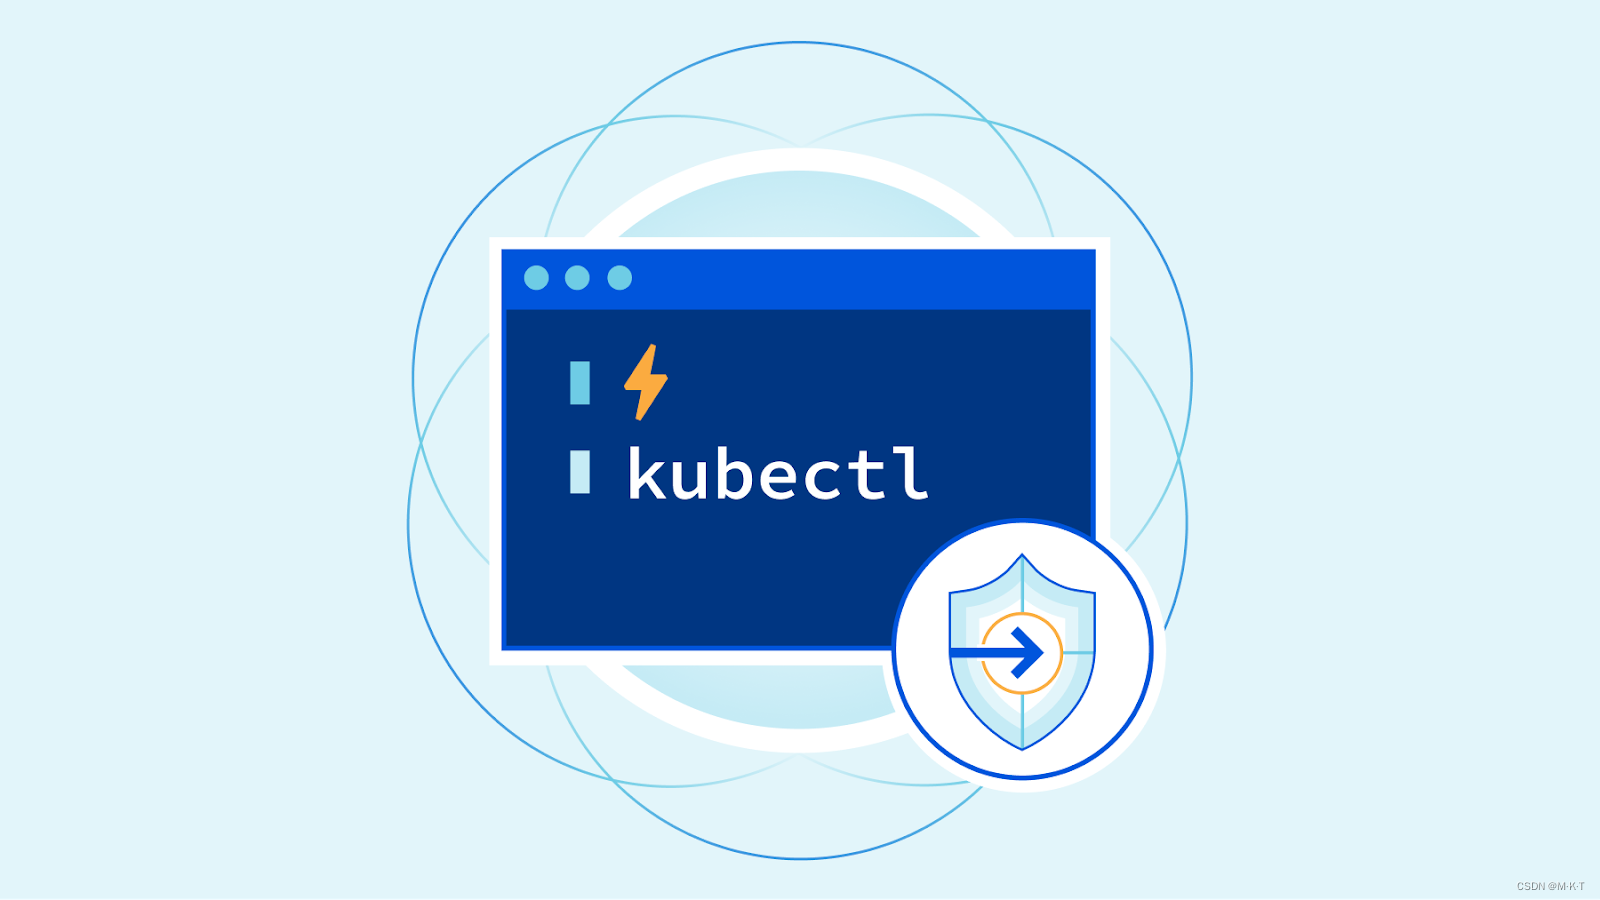 在 wsl 中运用 kubeconfig 实现自由管理 kubernetes 集群